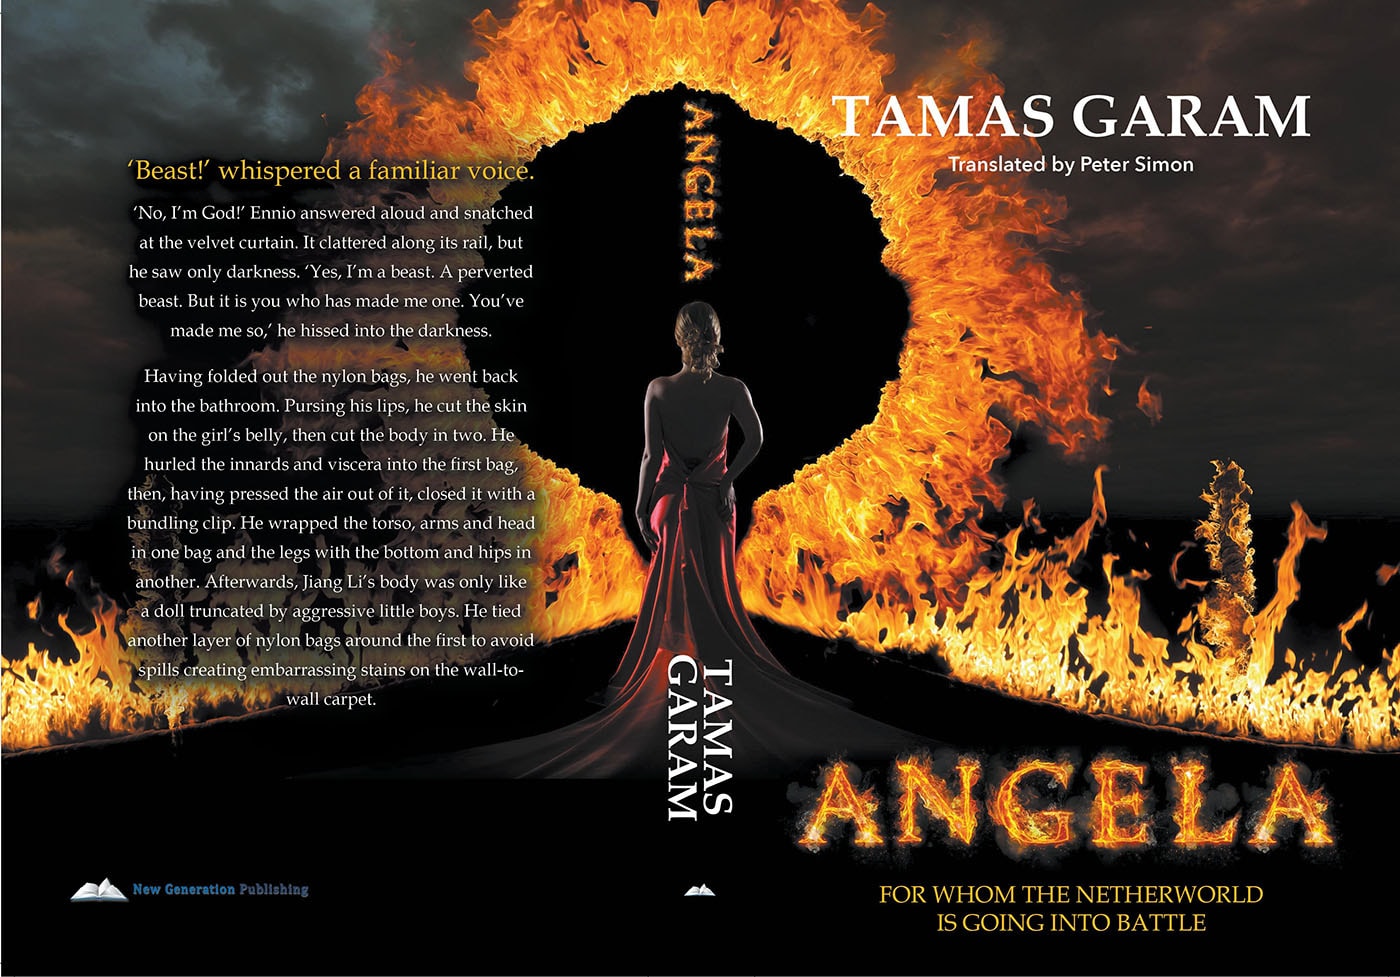 Angela book cover